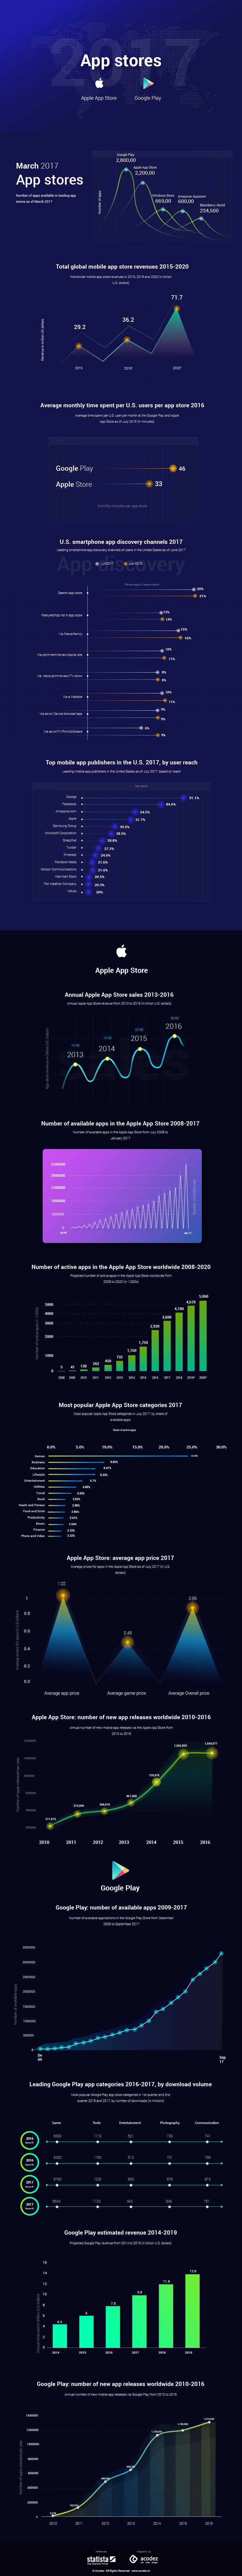 Mobile App Market-Statistics and Trends